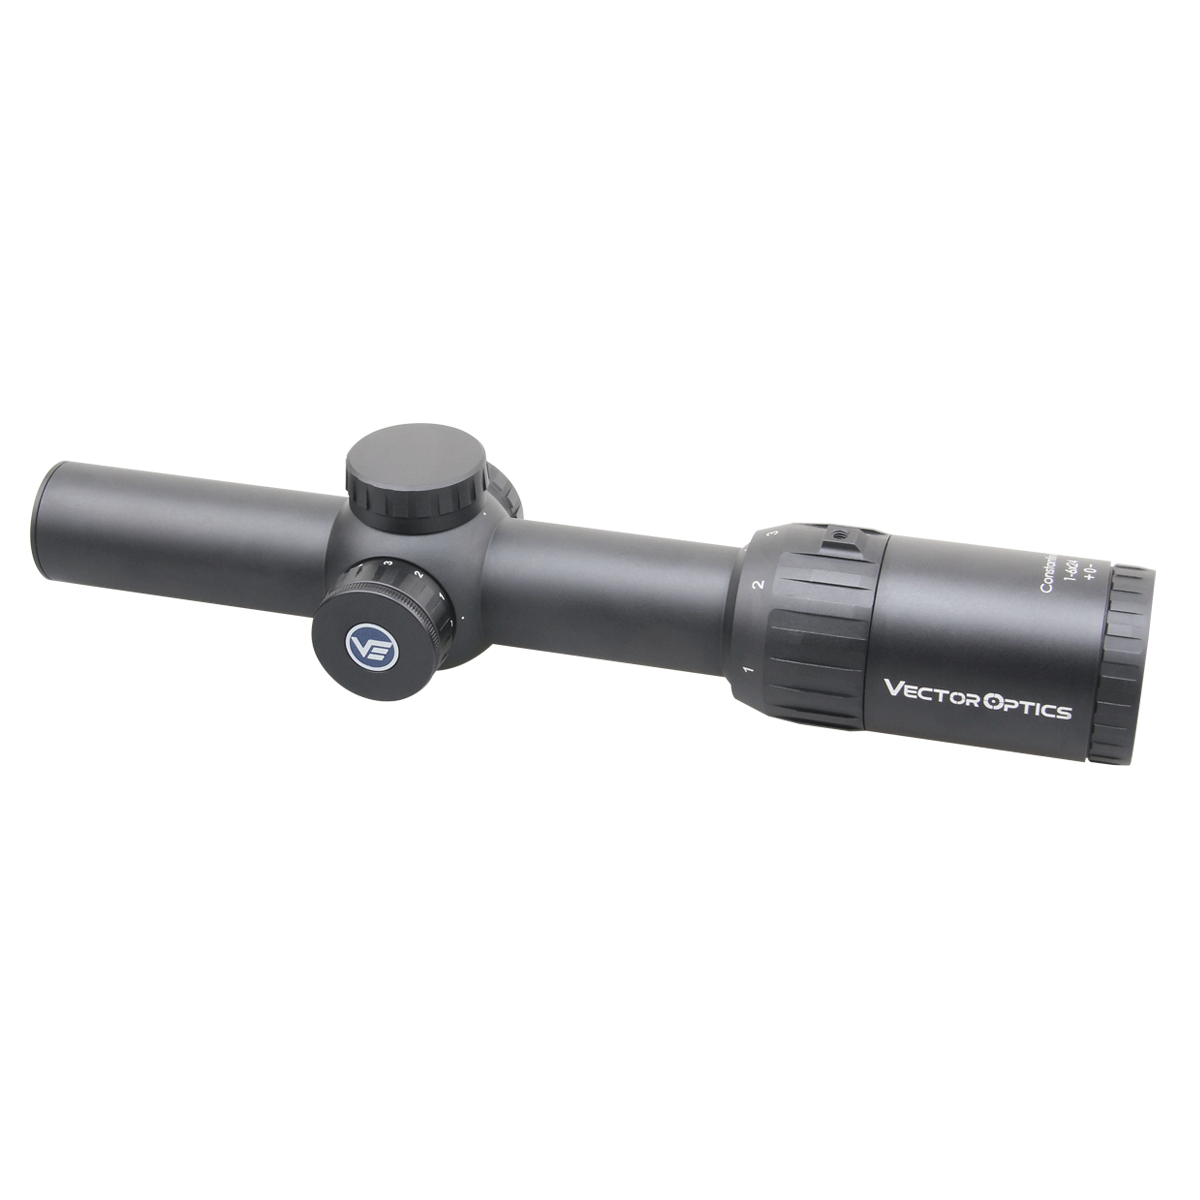 Constantine 1-6x24i Riflescope Fiber Dot Reticle